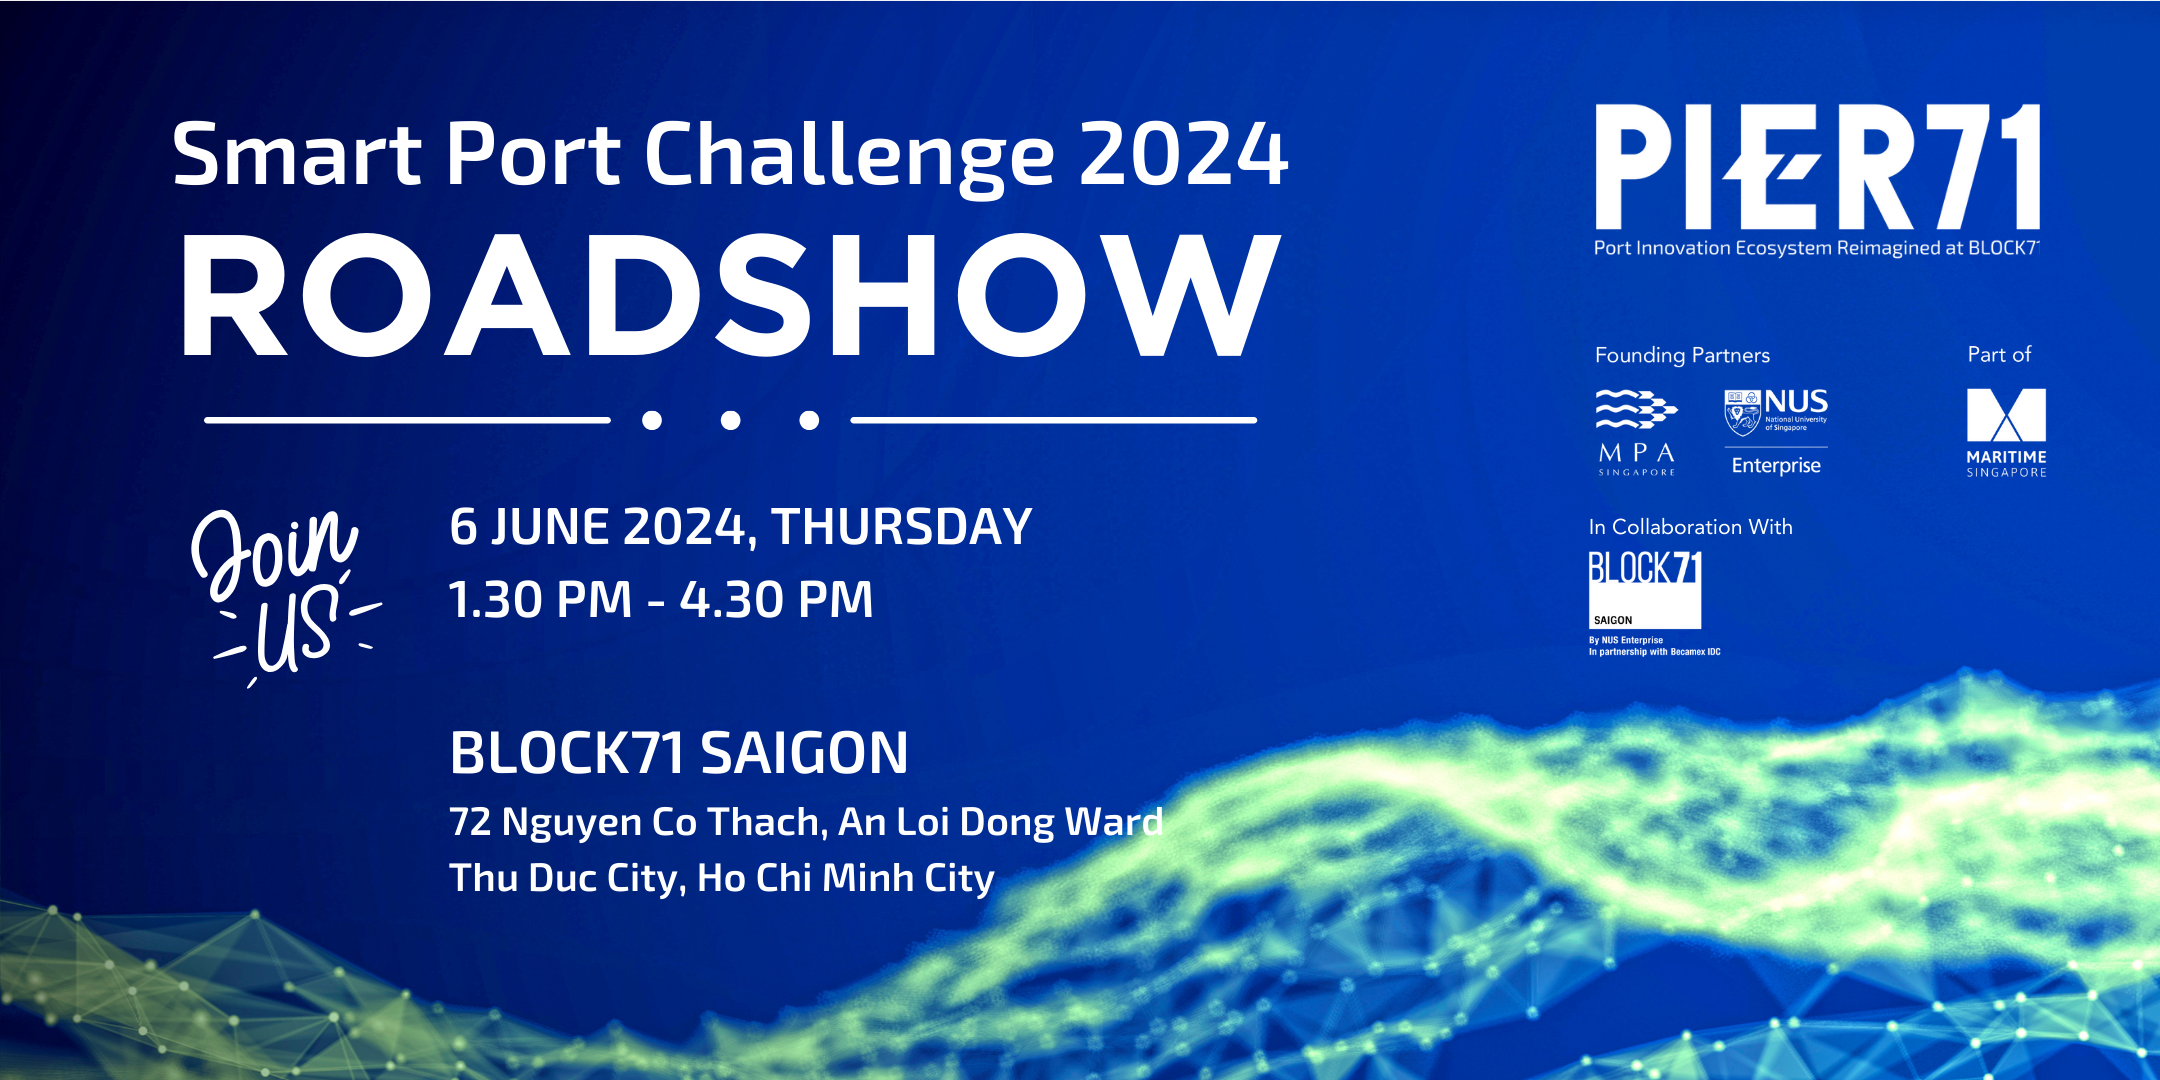 PIER71™ Smart Port Challenge 2024 Roadshow: Saigon